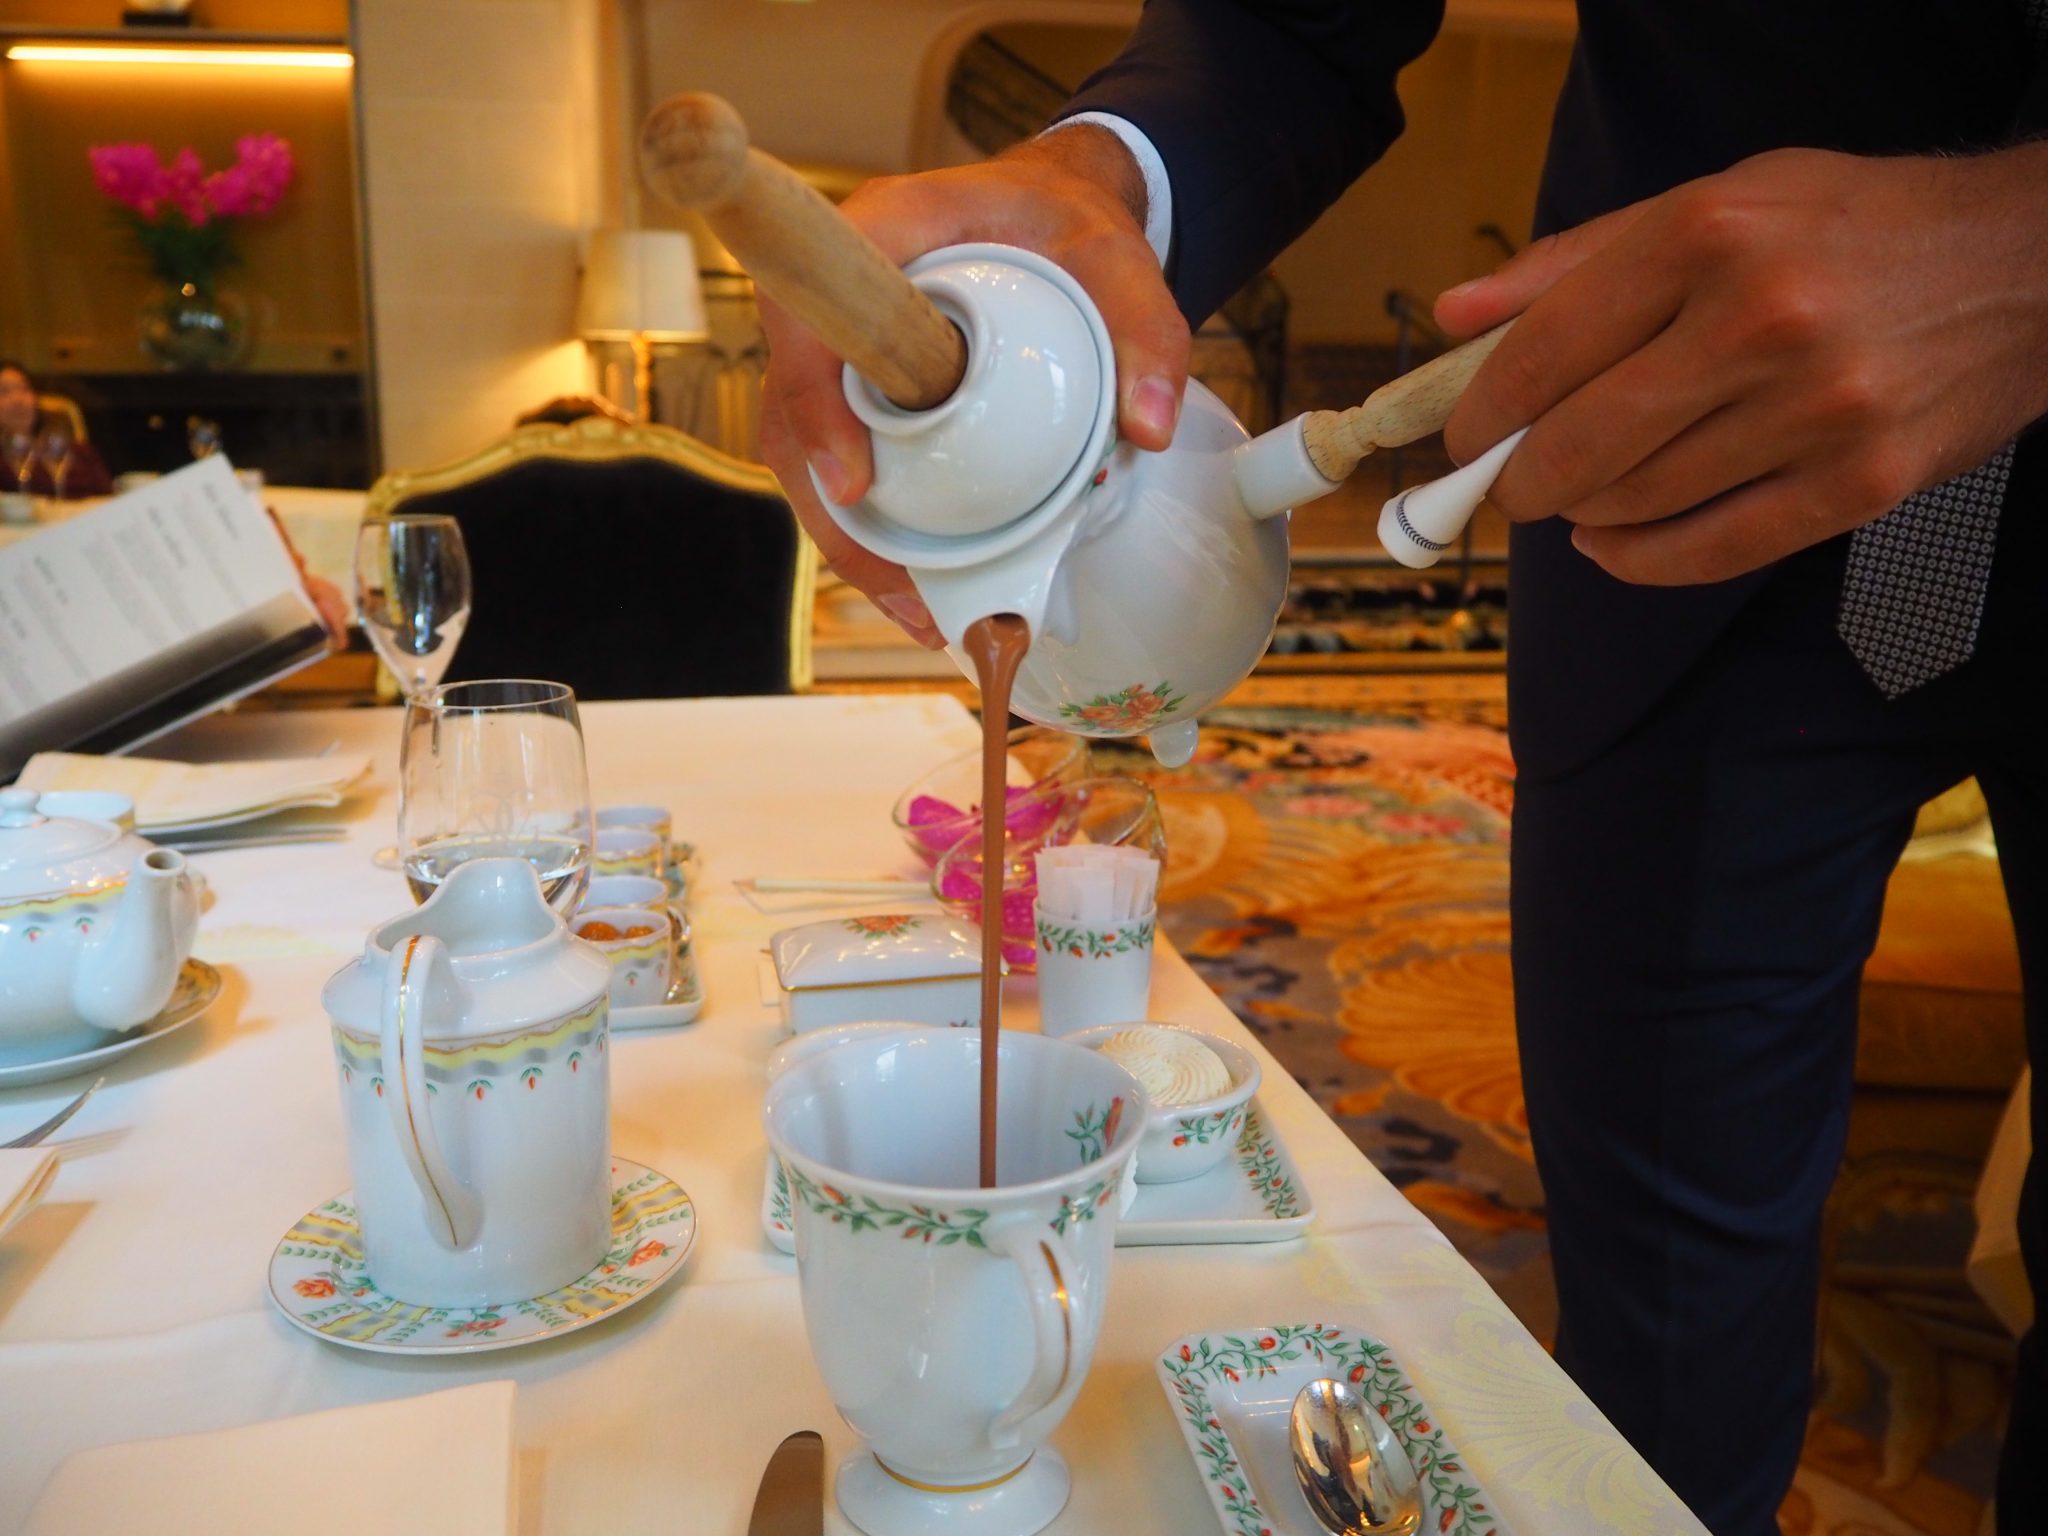 Afternoon Tea Total: Review: Mariage Frères, Paris